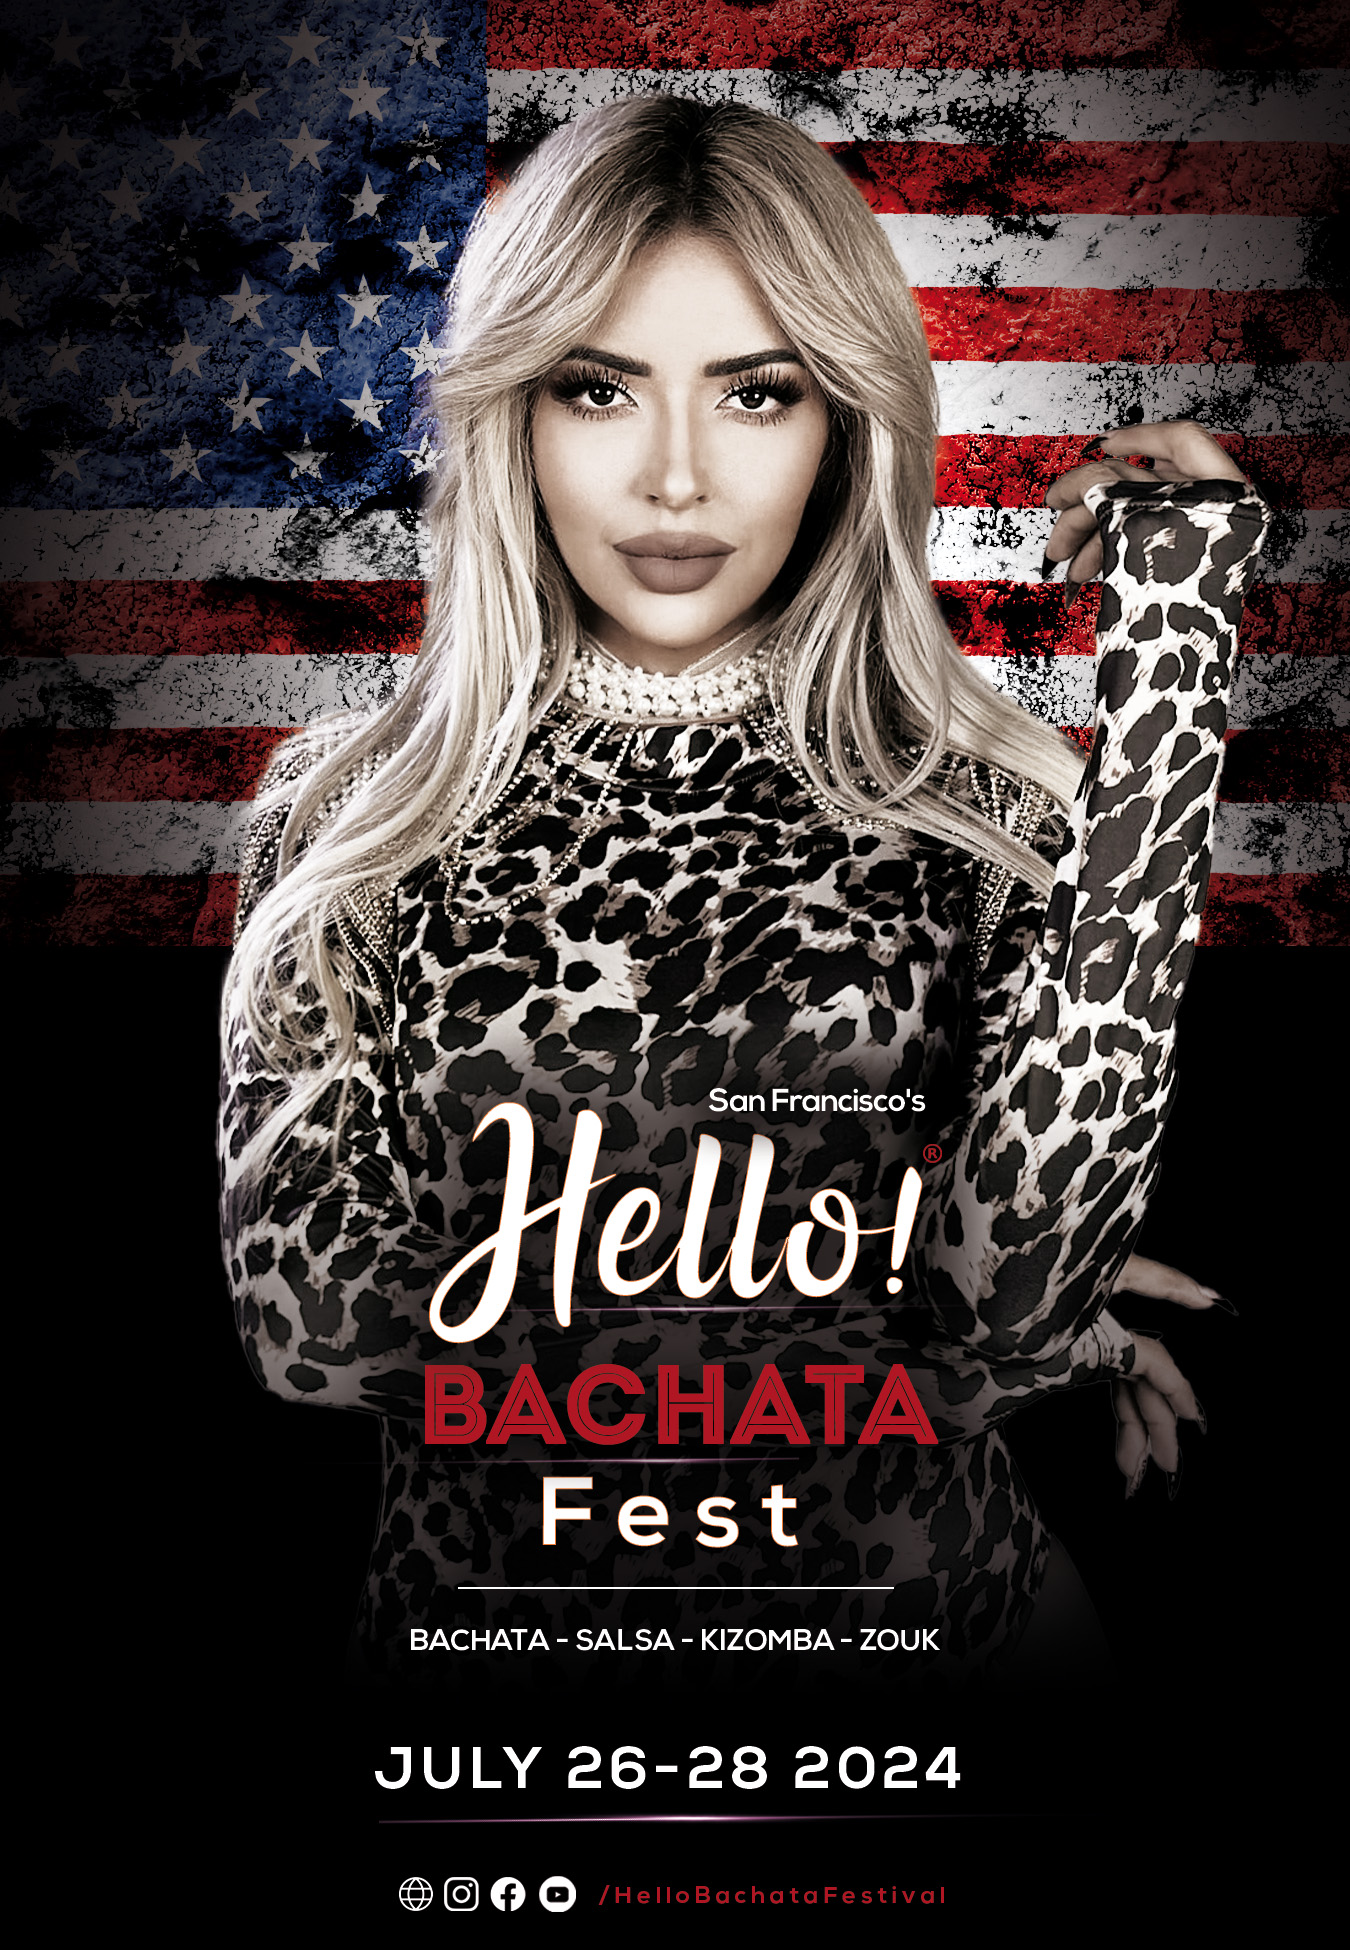 Hello! Bachata Fest - Monique Manzo - Reno Nevada